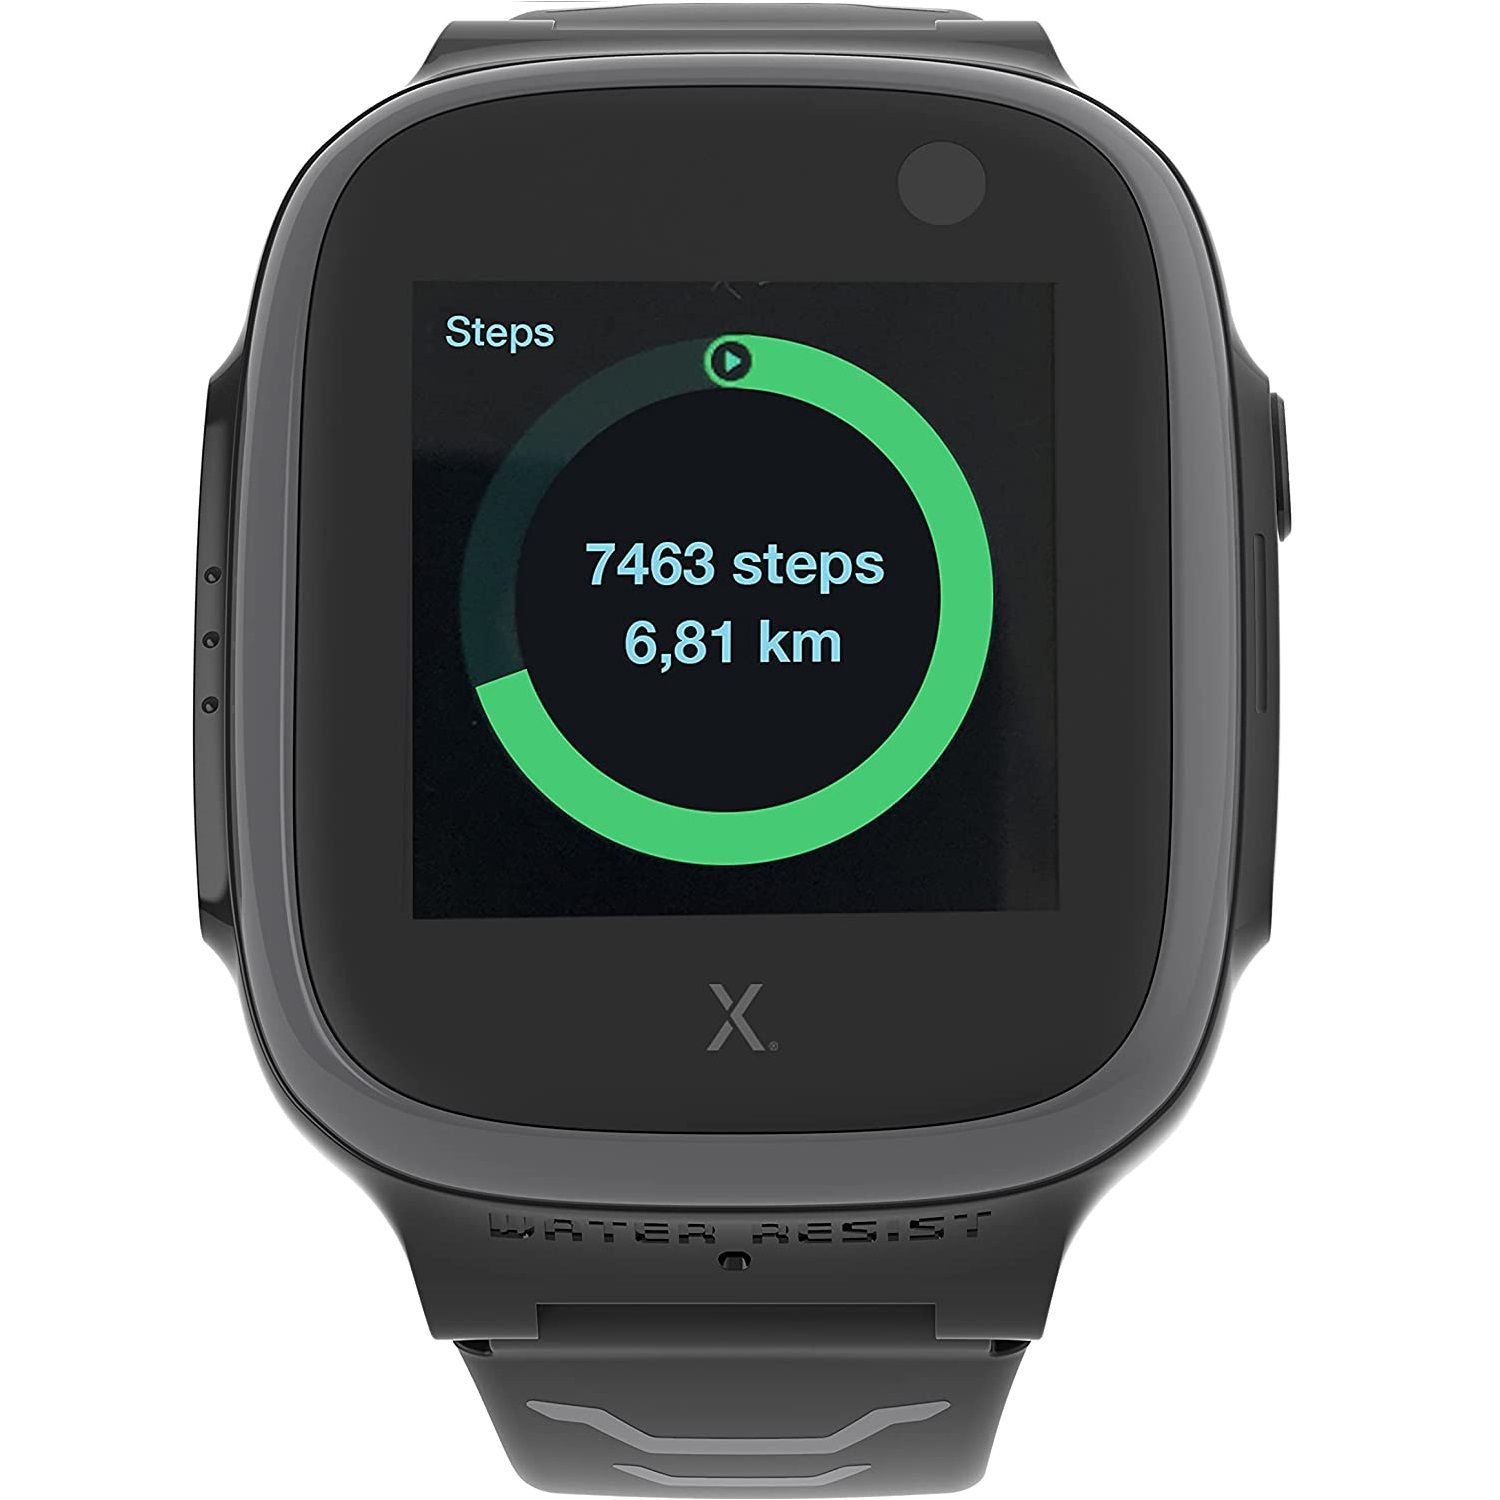 Xplora X5 Play smartwatch on a white background